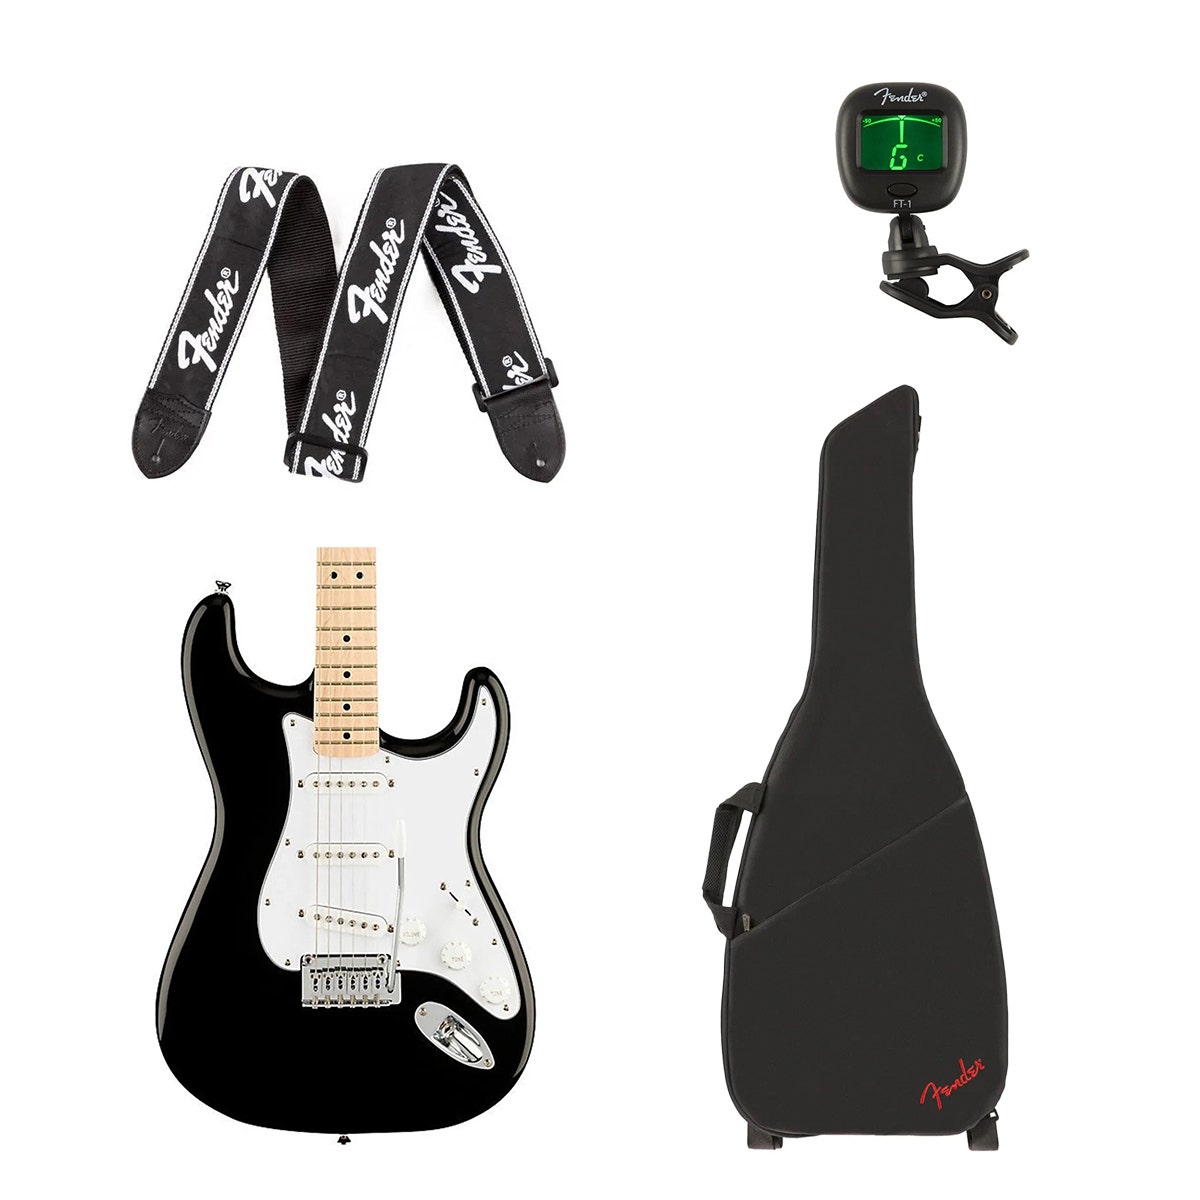 Fender Squier Affinity Stratocaster Electric Guitar Bundle (Black)